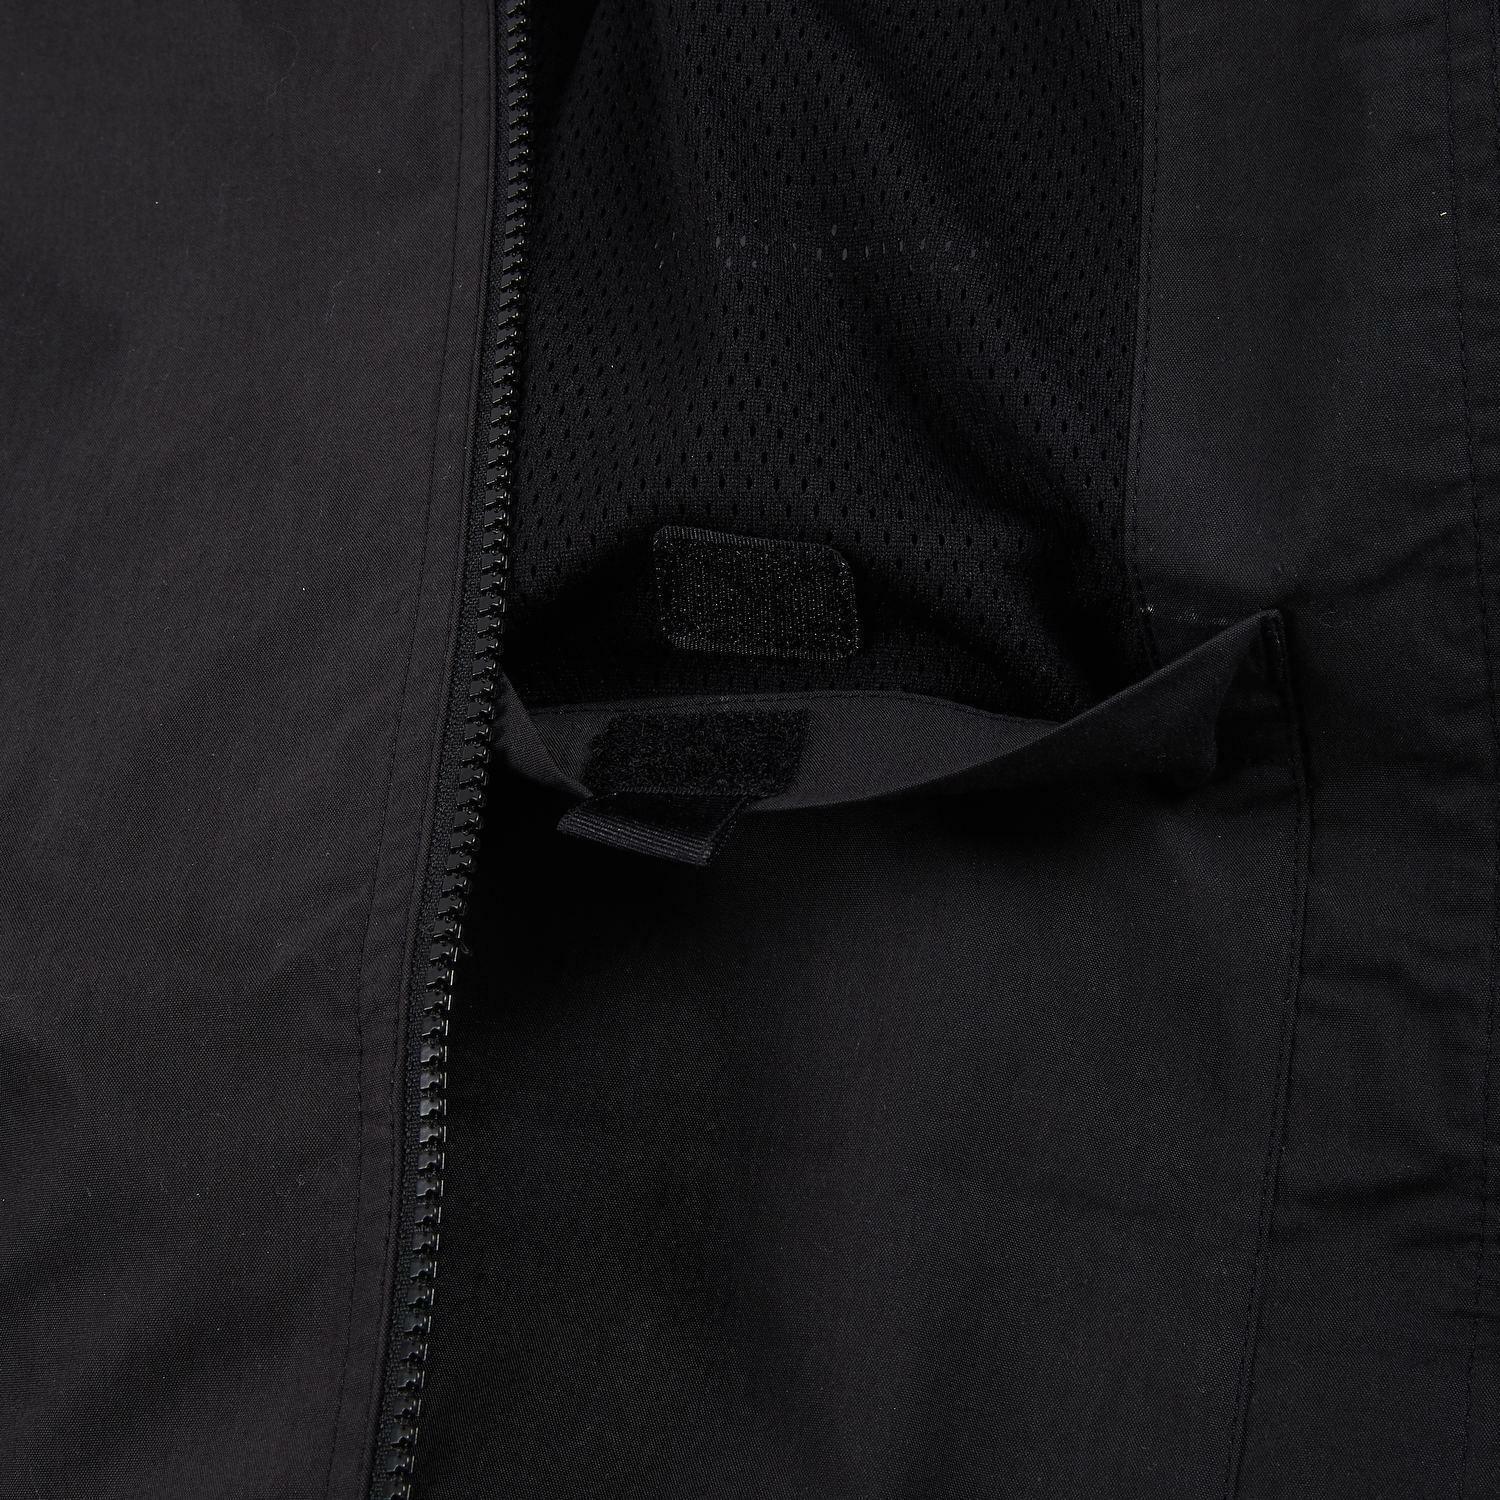 carhartt carhartt marsh jacket giacchetto uomo nero i025756c427